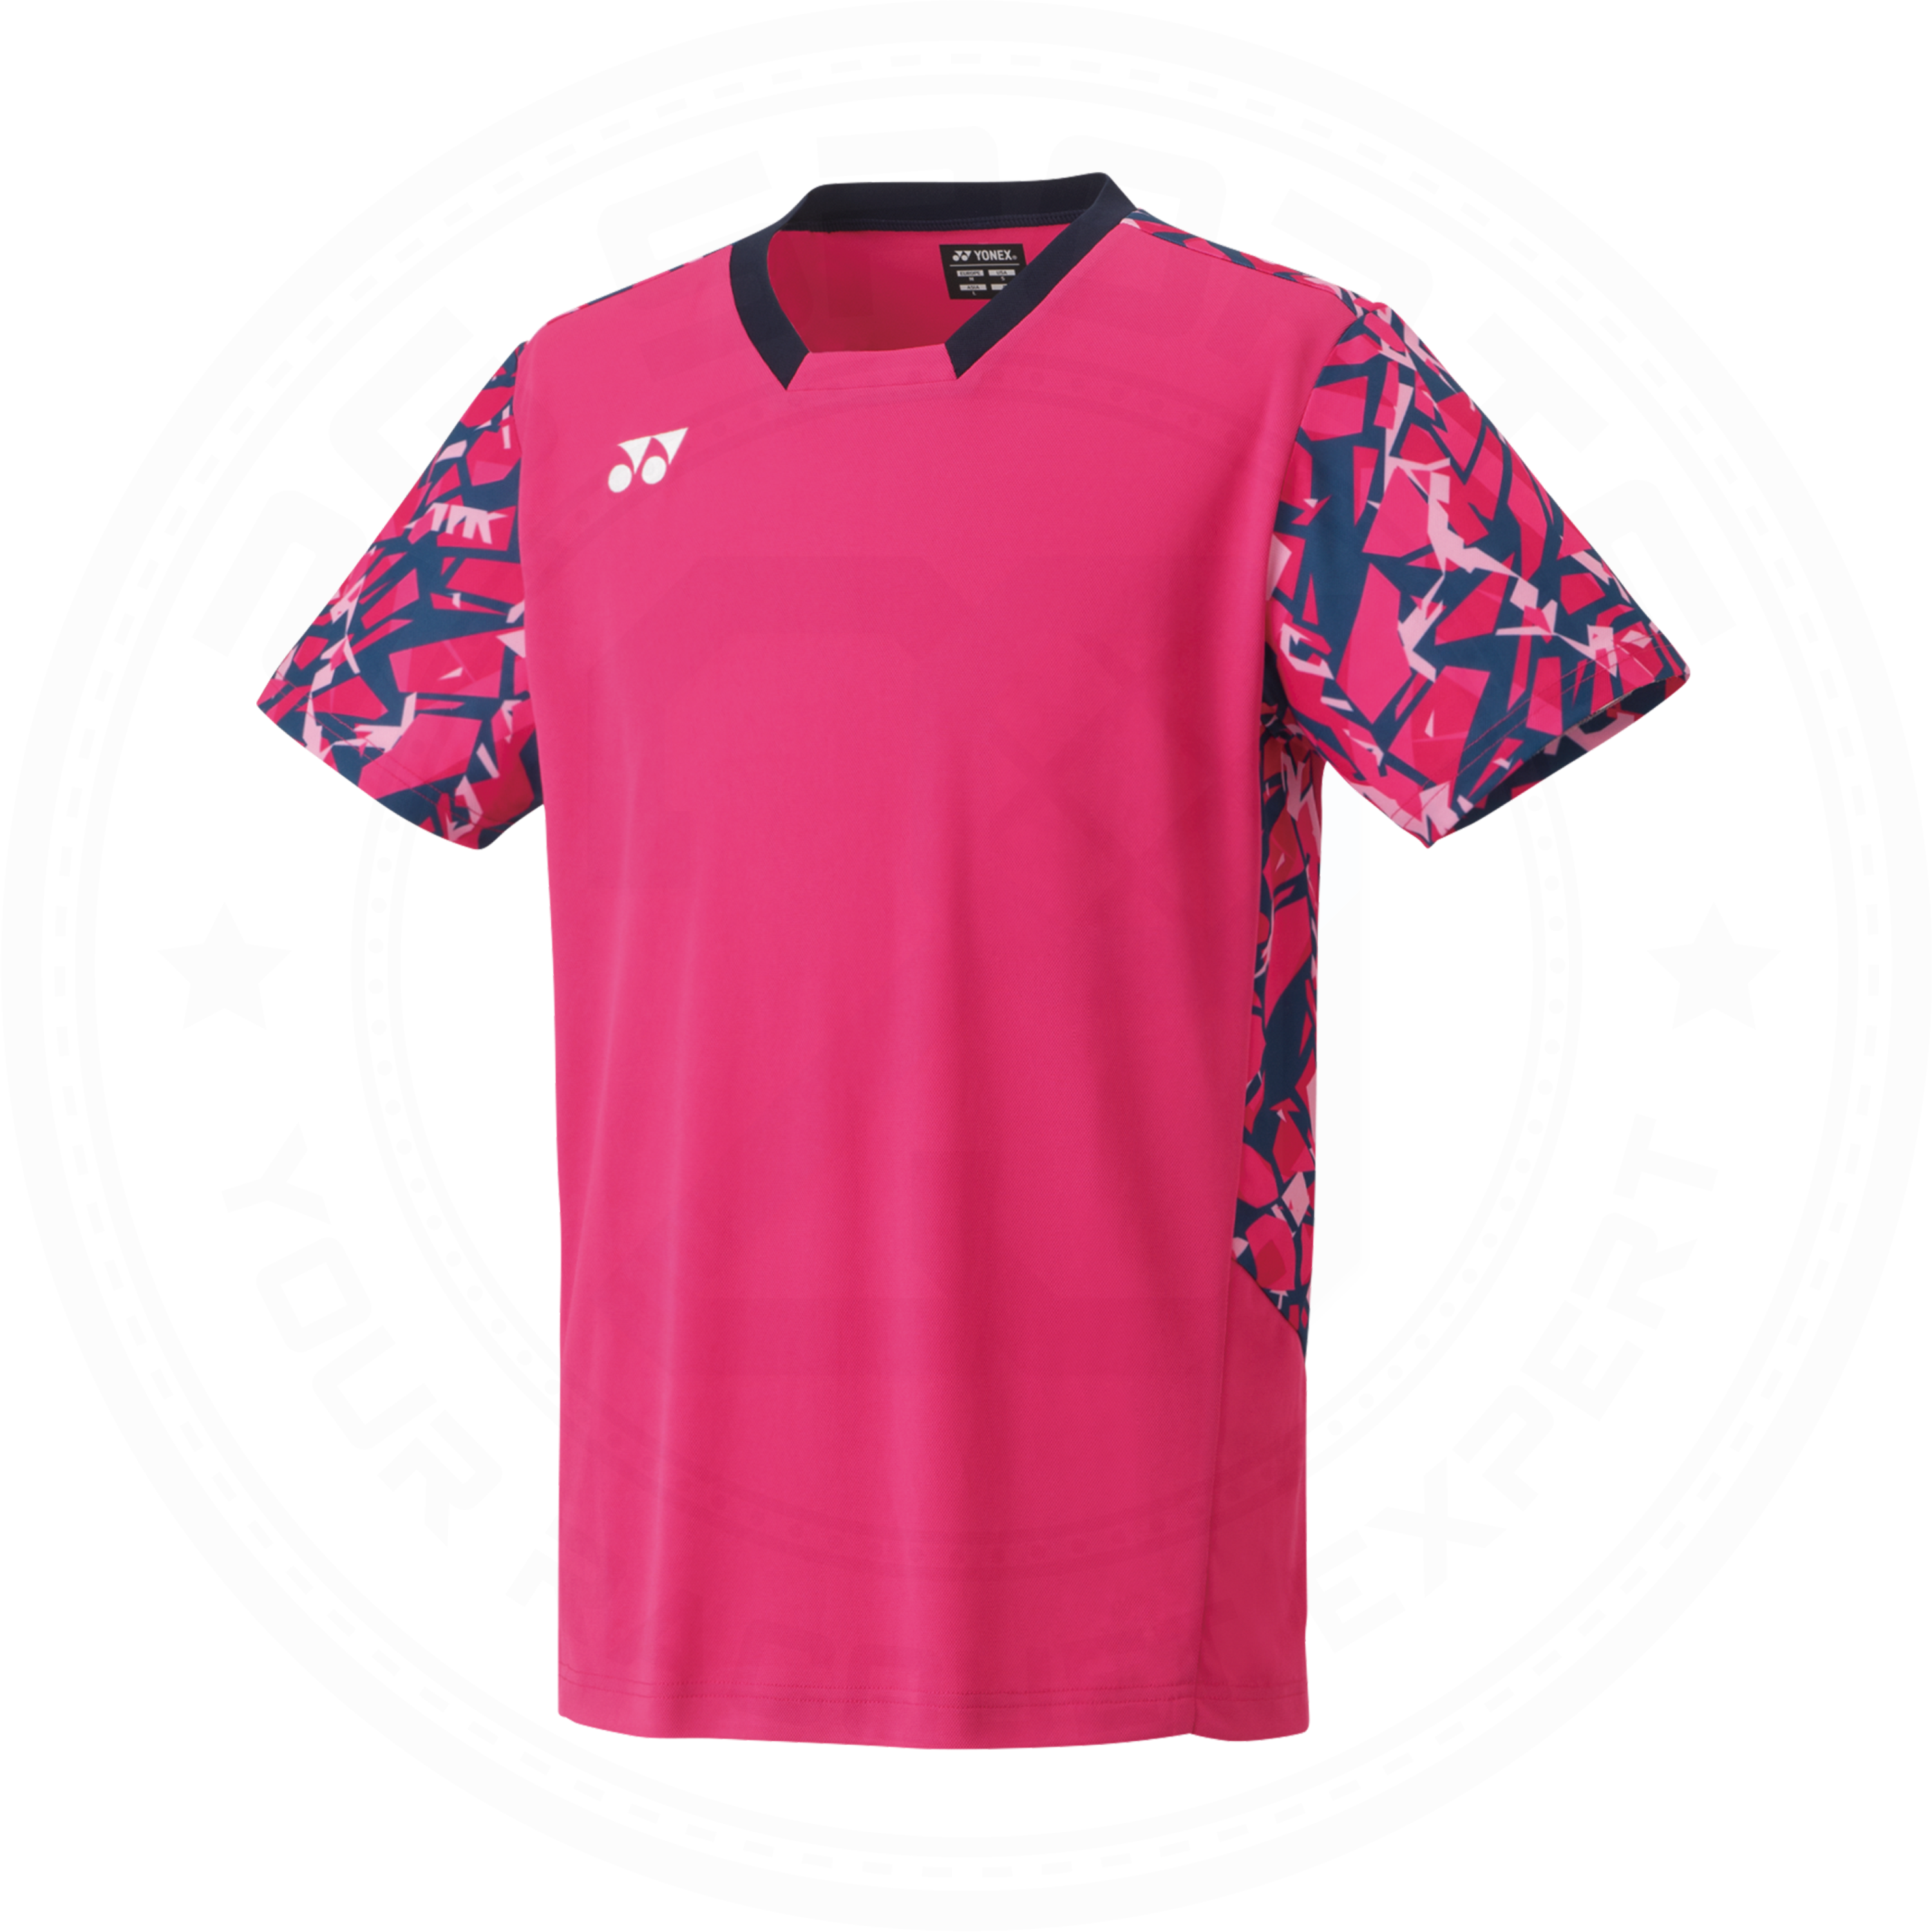 Yonex Japan National Badminton/ Sports Shirt 10553EX BerryPink UNISEX (Clearance)